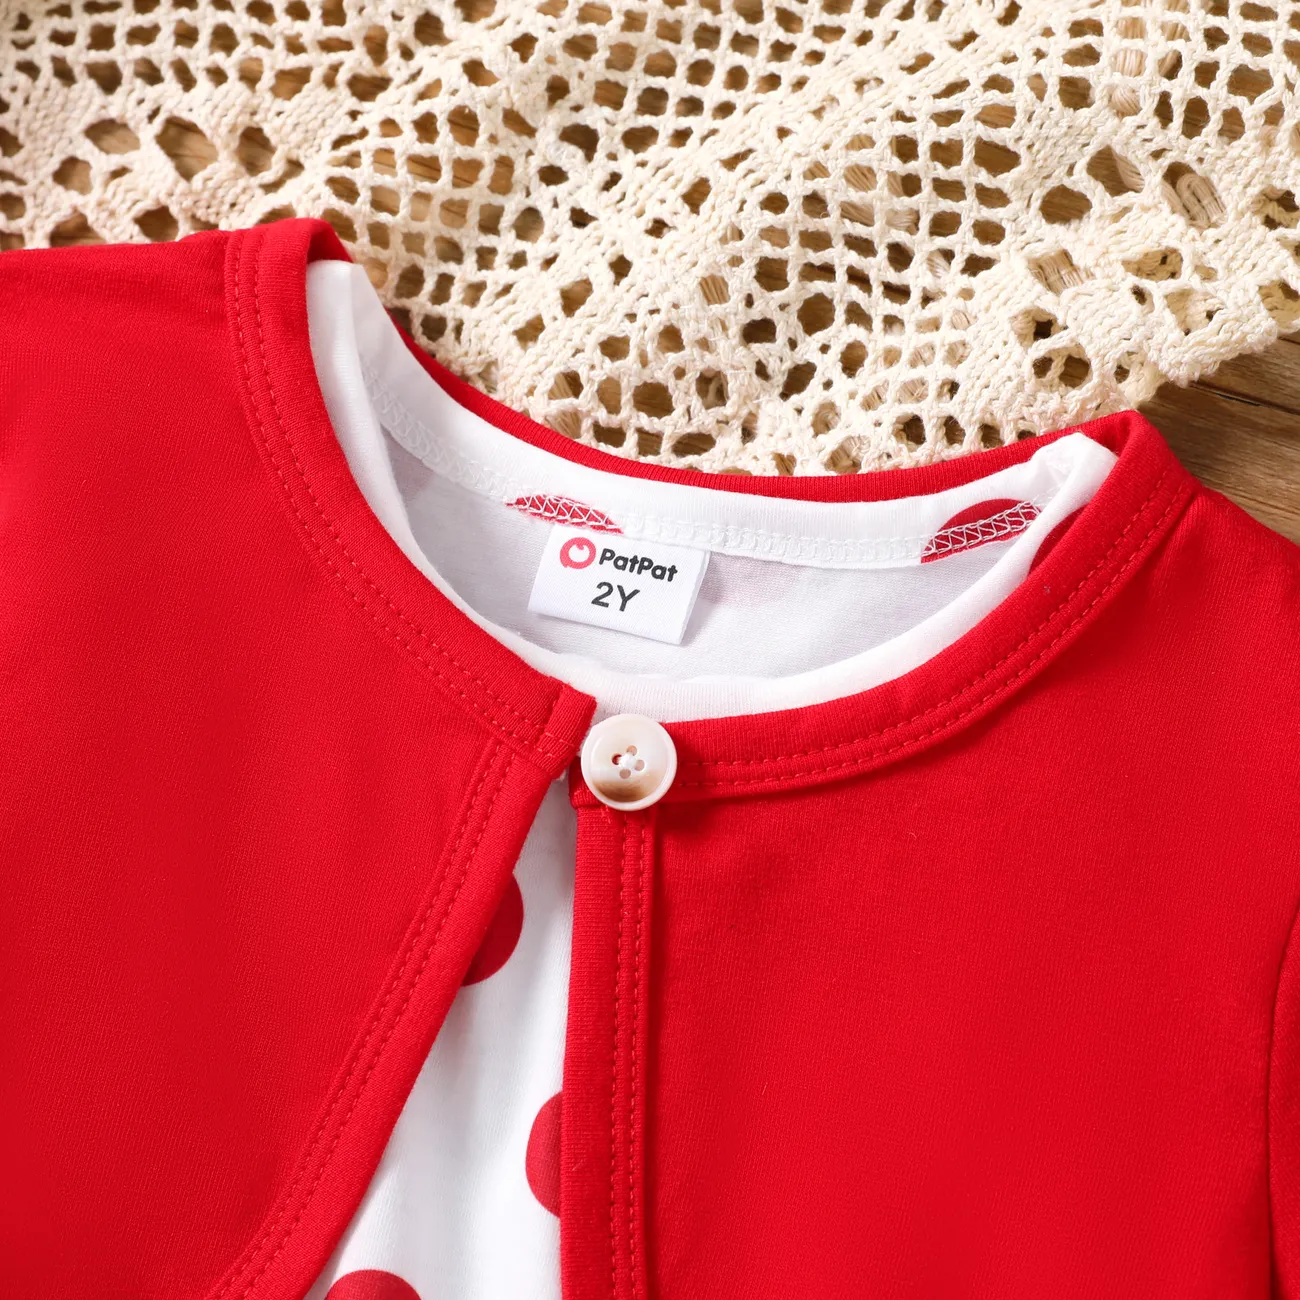 Toddler Girl 2pcs Cardigan and Rabbit Polka Dots Dress Set Red big image 1